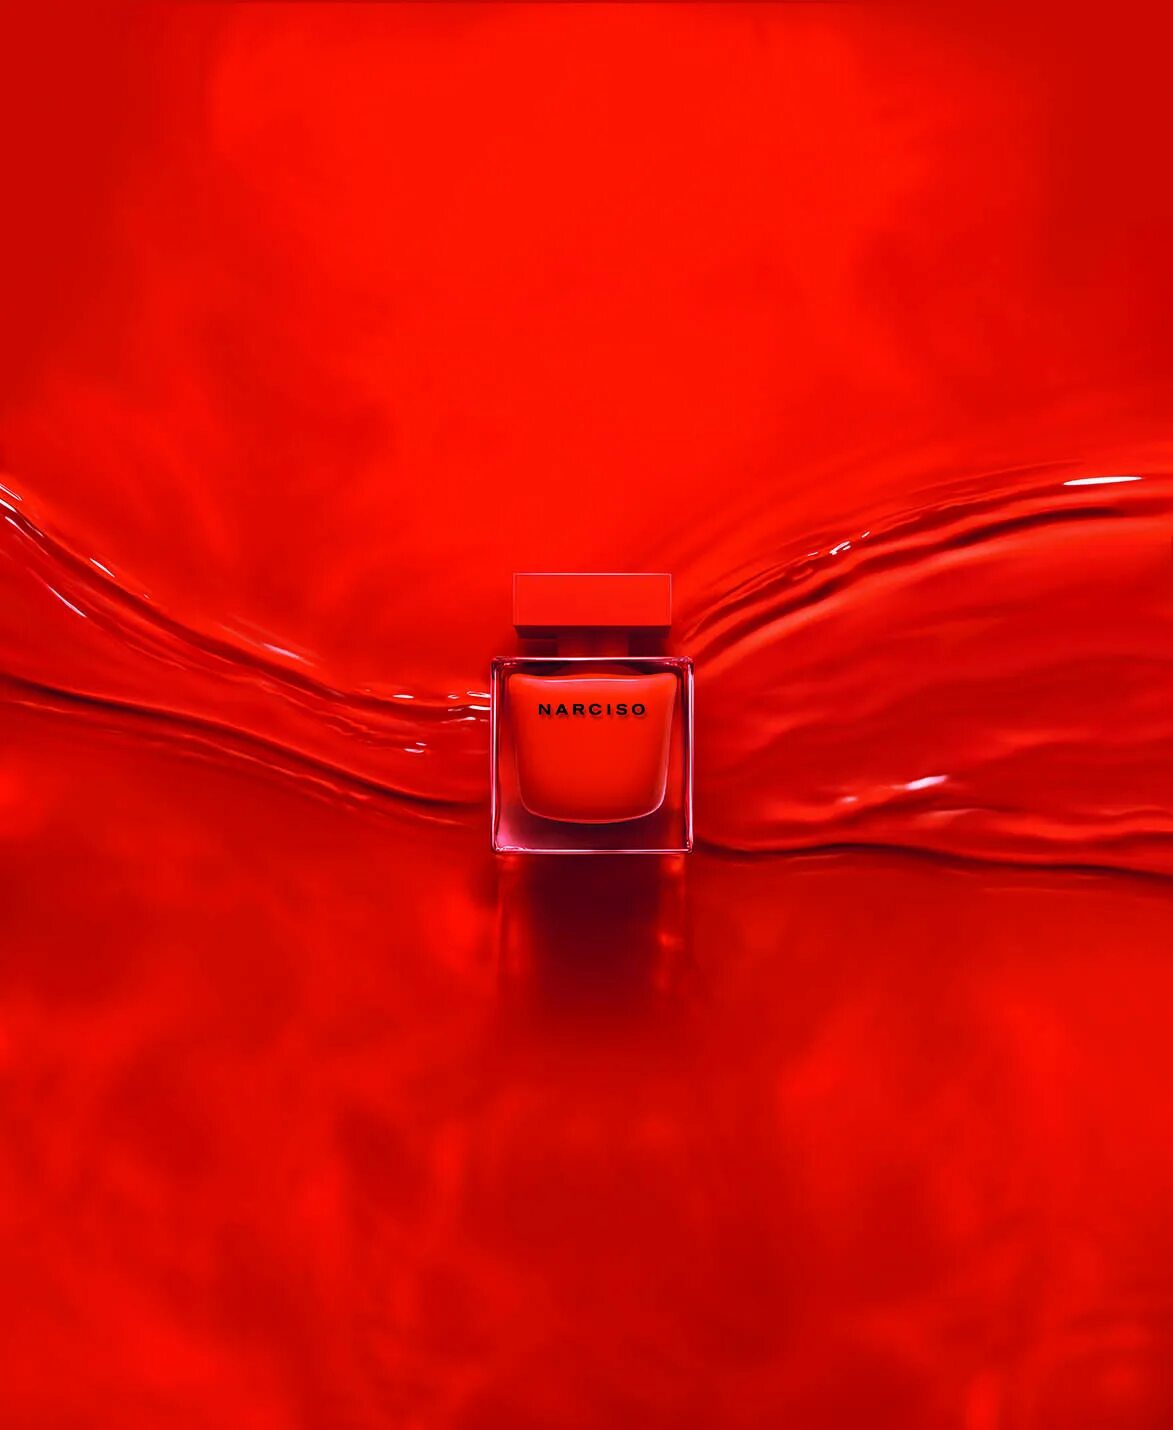 Luxury 24k supreme rouge. Духи 24к Supreme rouge. Narciso Rodriguez rouge. Narciso Rodriguez Narciso Eau de Parfum rouge. Paris World Luxury 24k Supreme rouge.